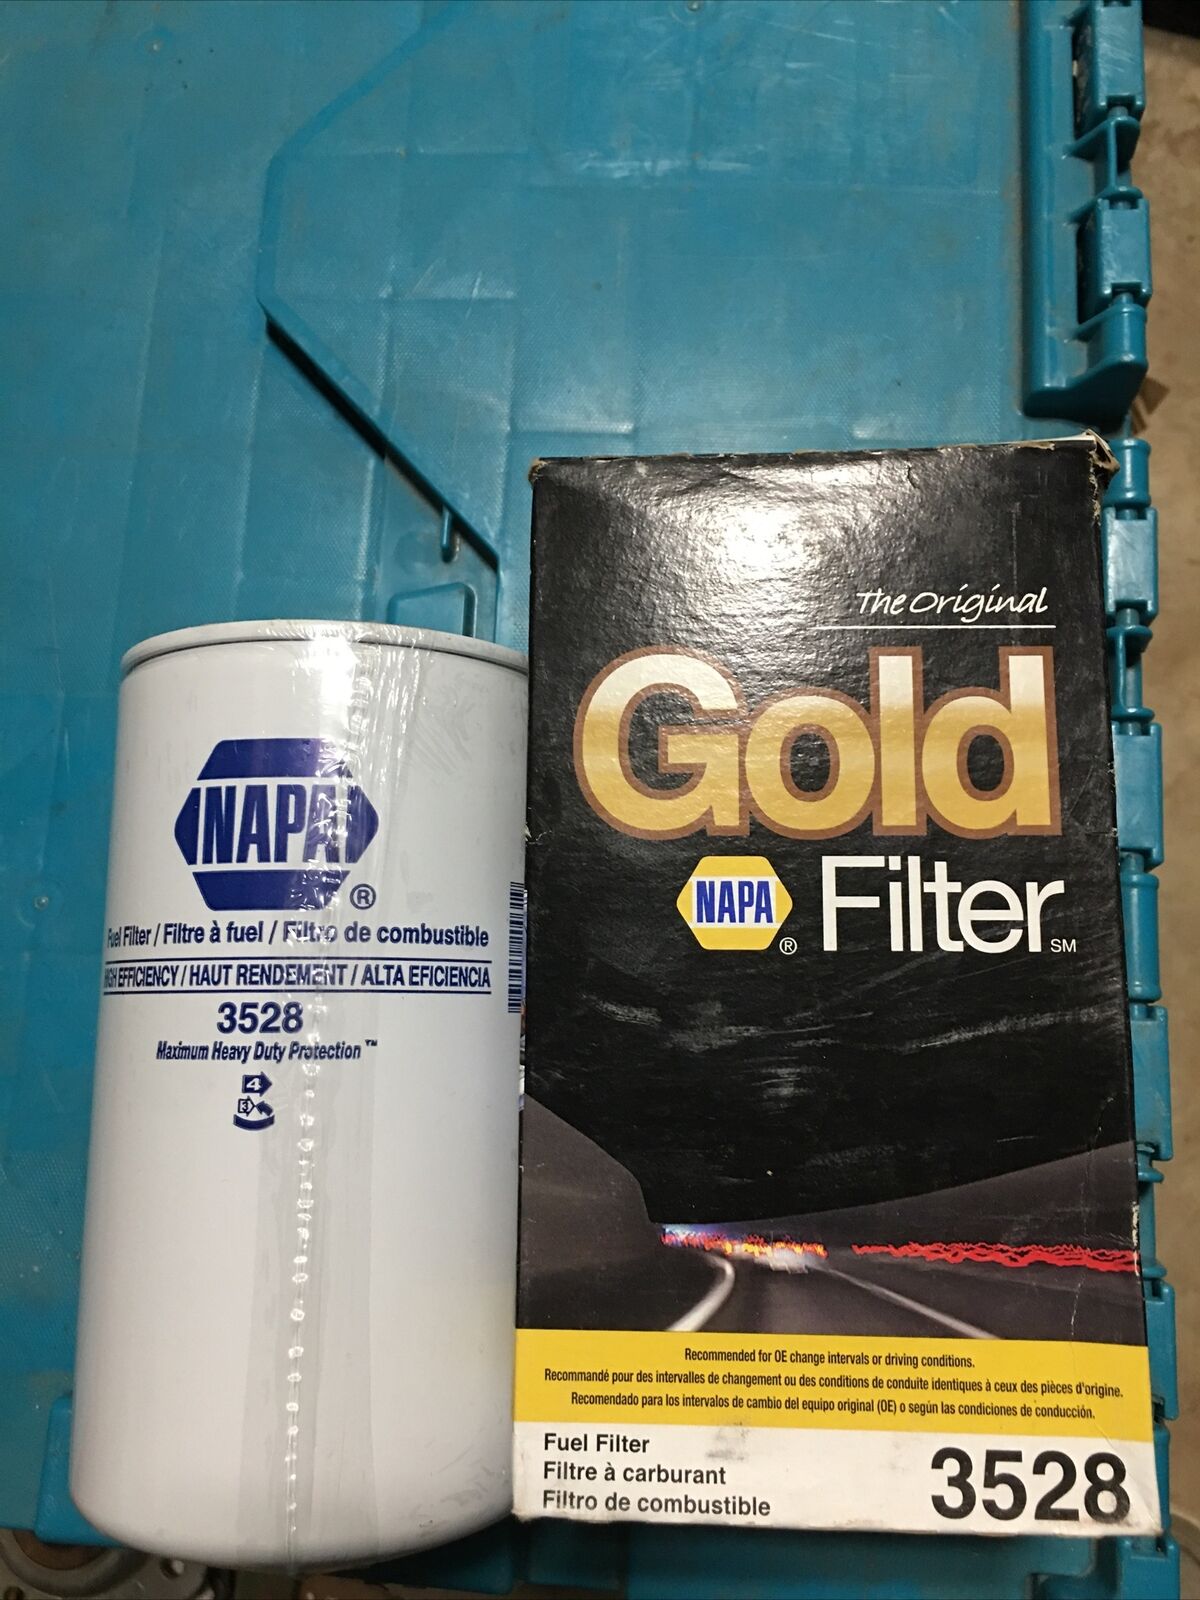 Napa Gold Fuel Filter HIGH EFFICIENCY 3528